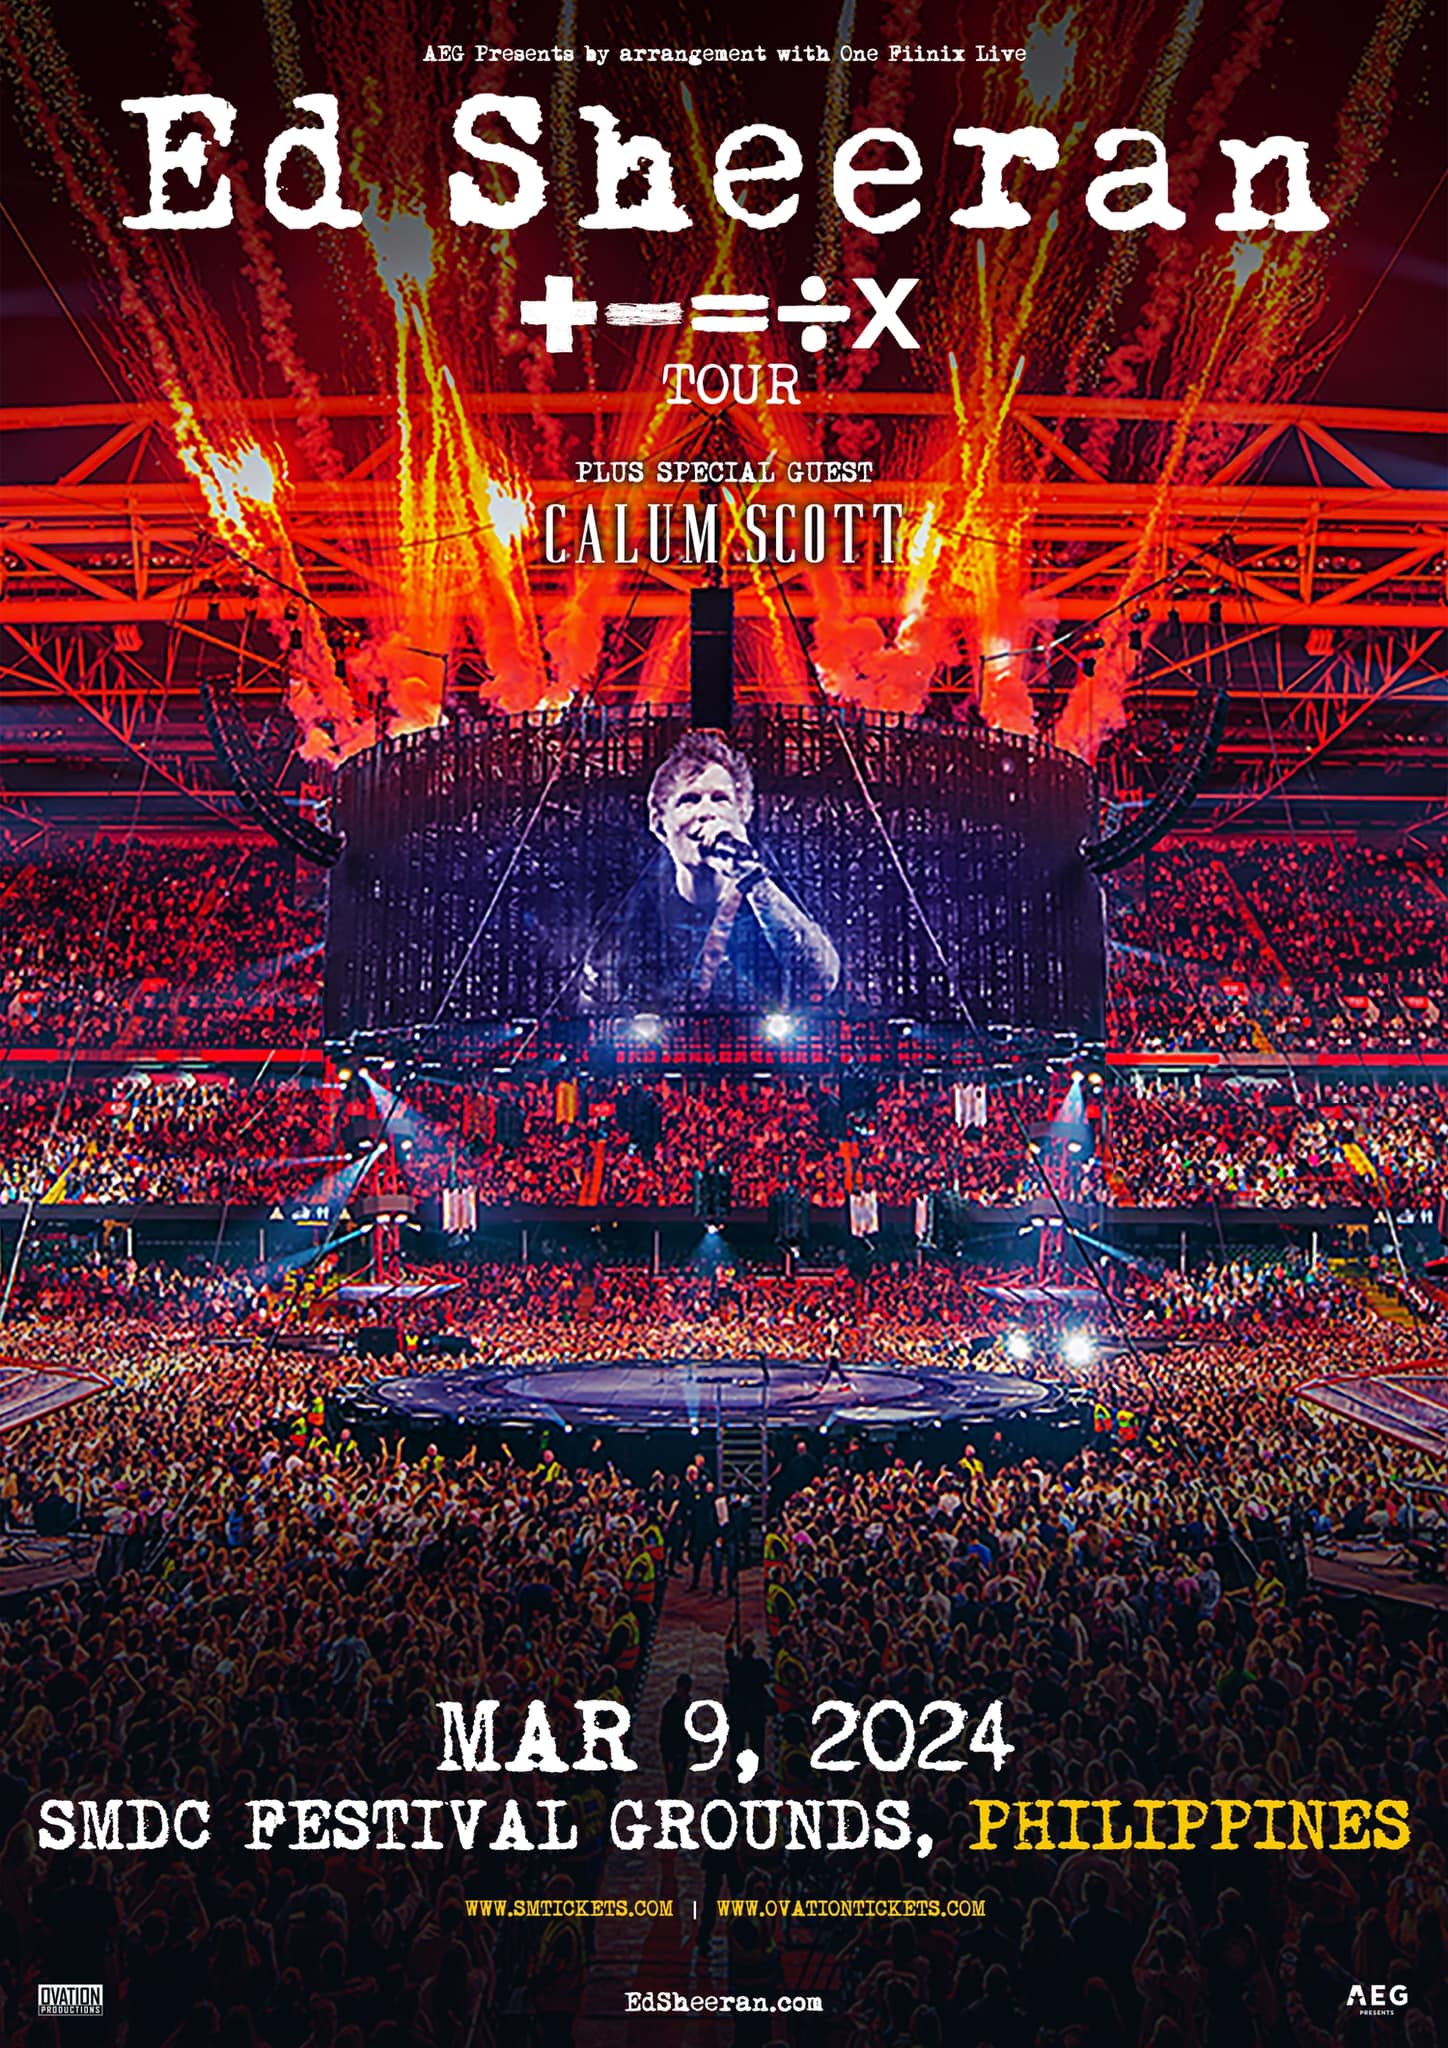 Ed Sheeran returns to Manila in 2024 with ‘+ = ÷ x Tour’